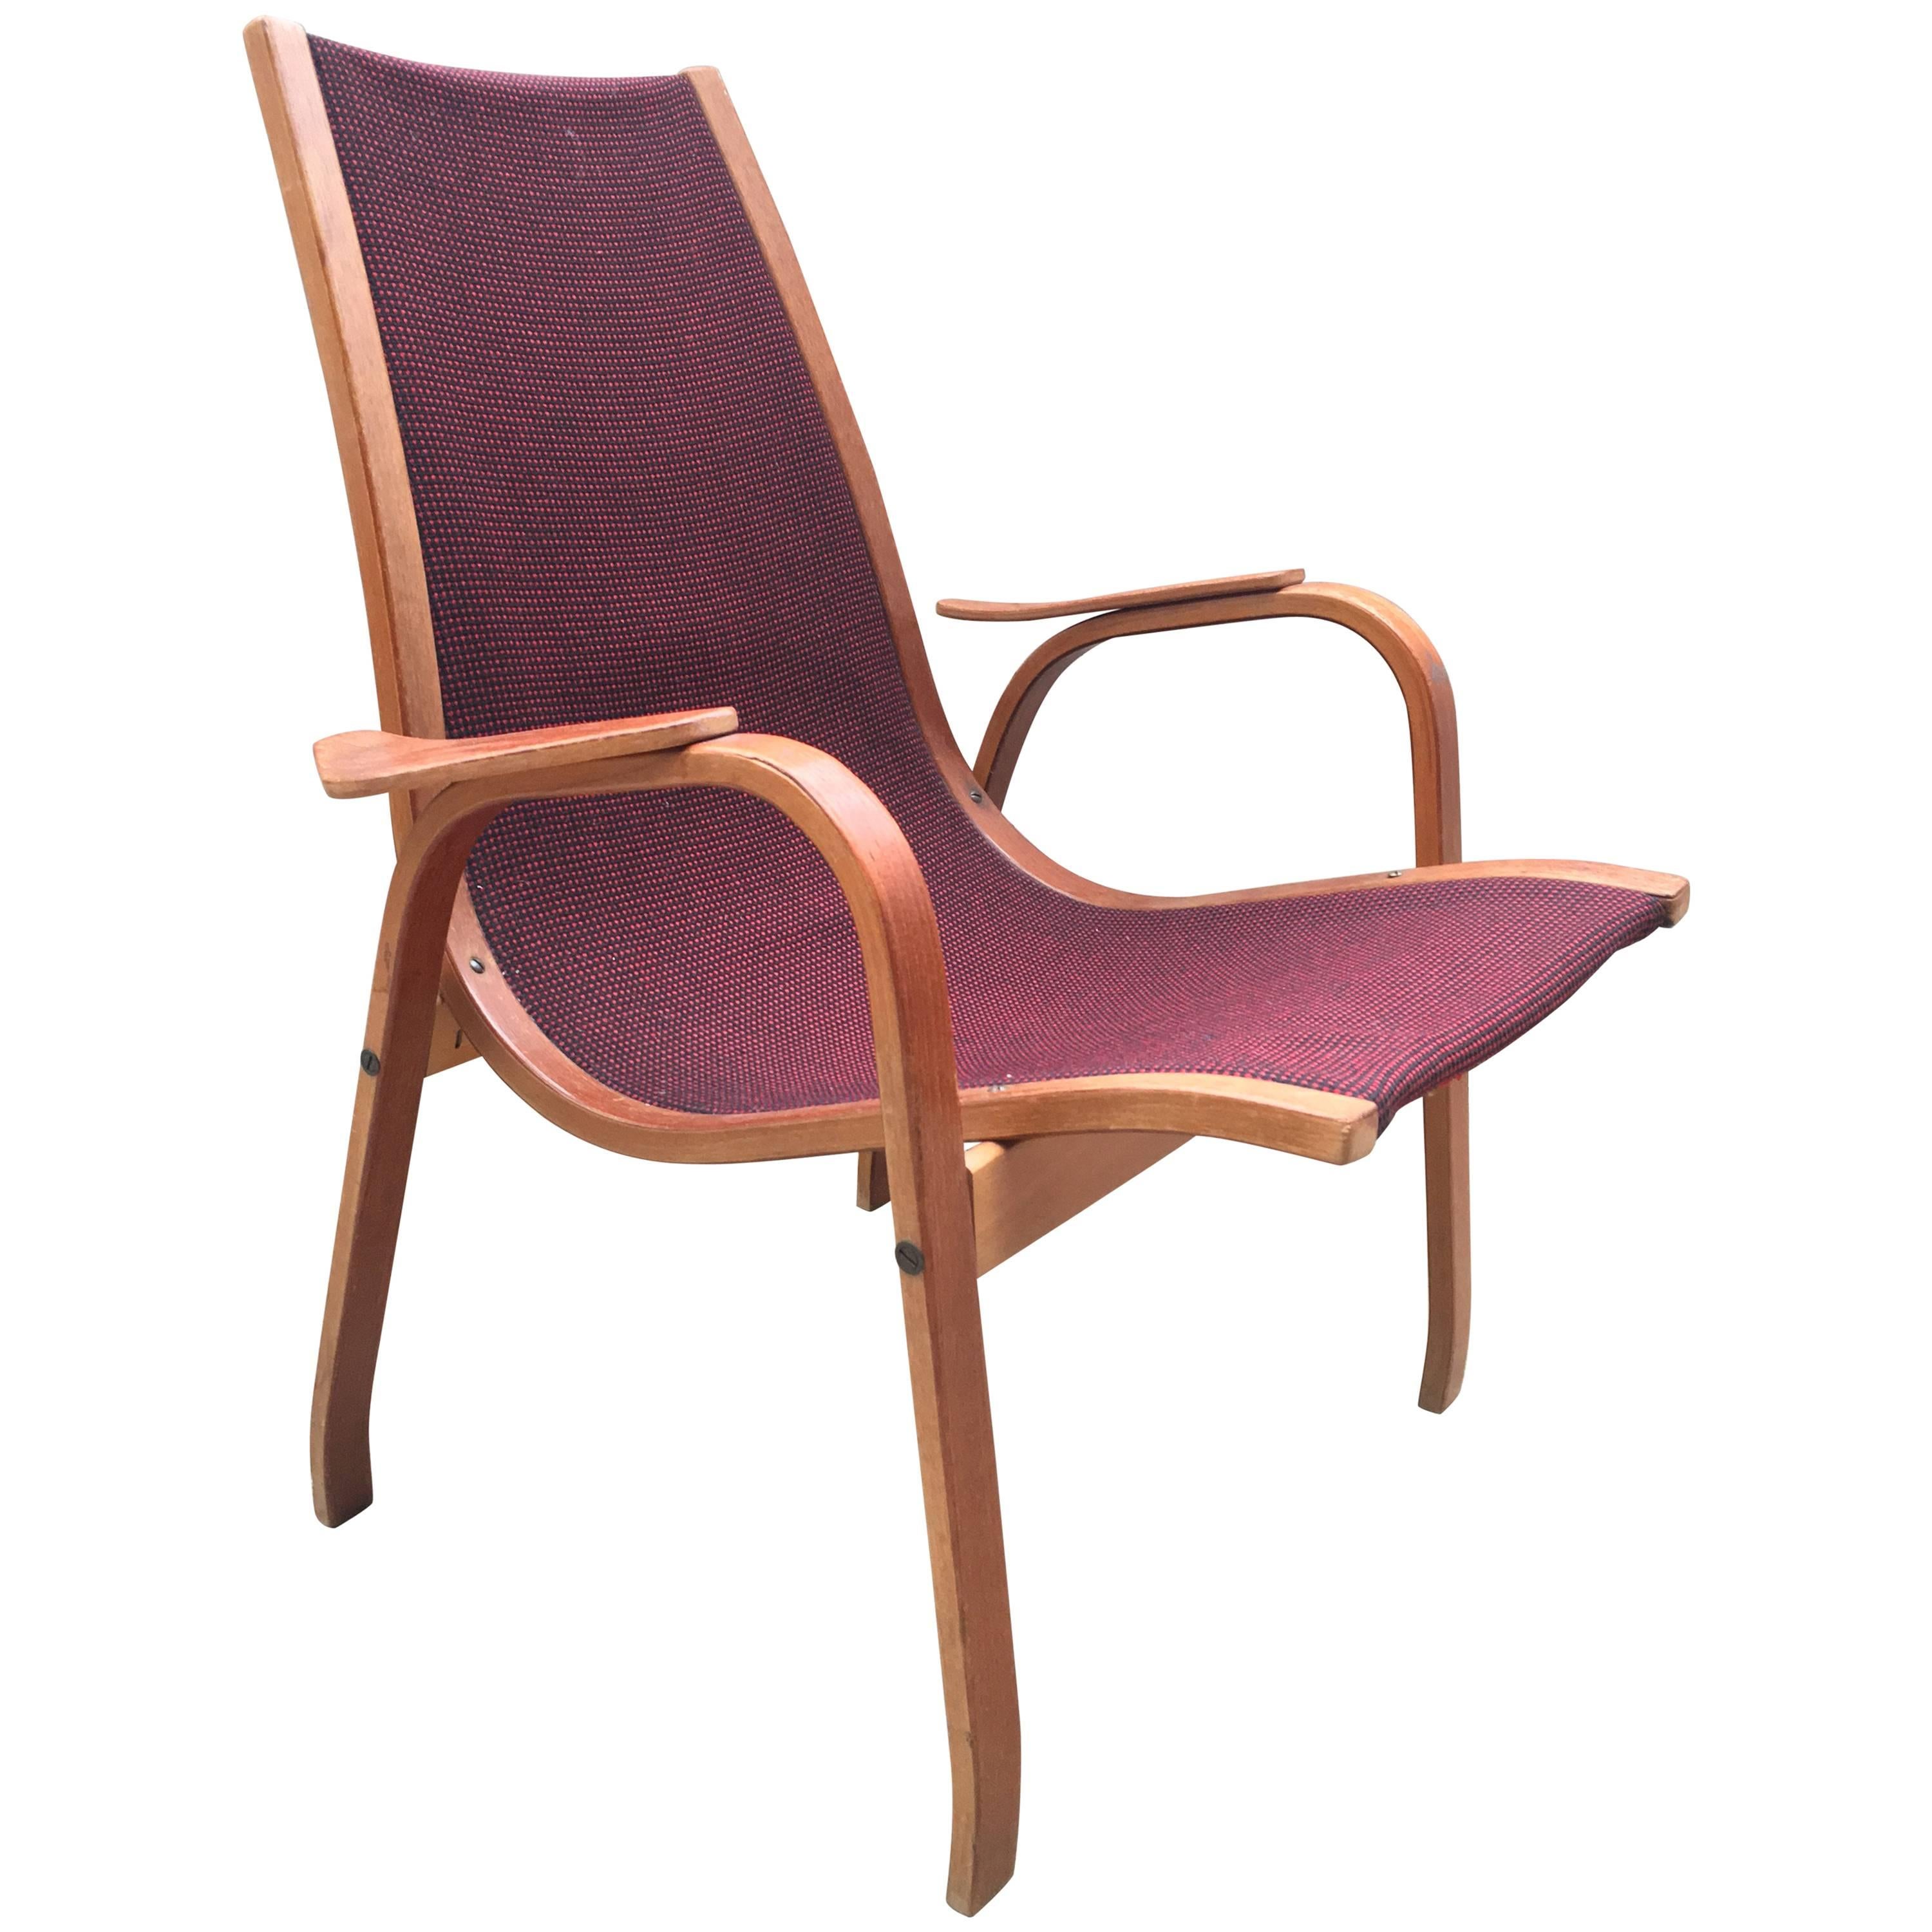 Vintage Swedish Lounge Chair Armchair in Style of Yngve Ekström Design, 1960 For Sale